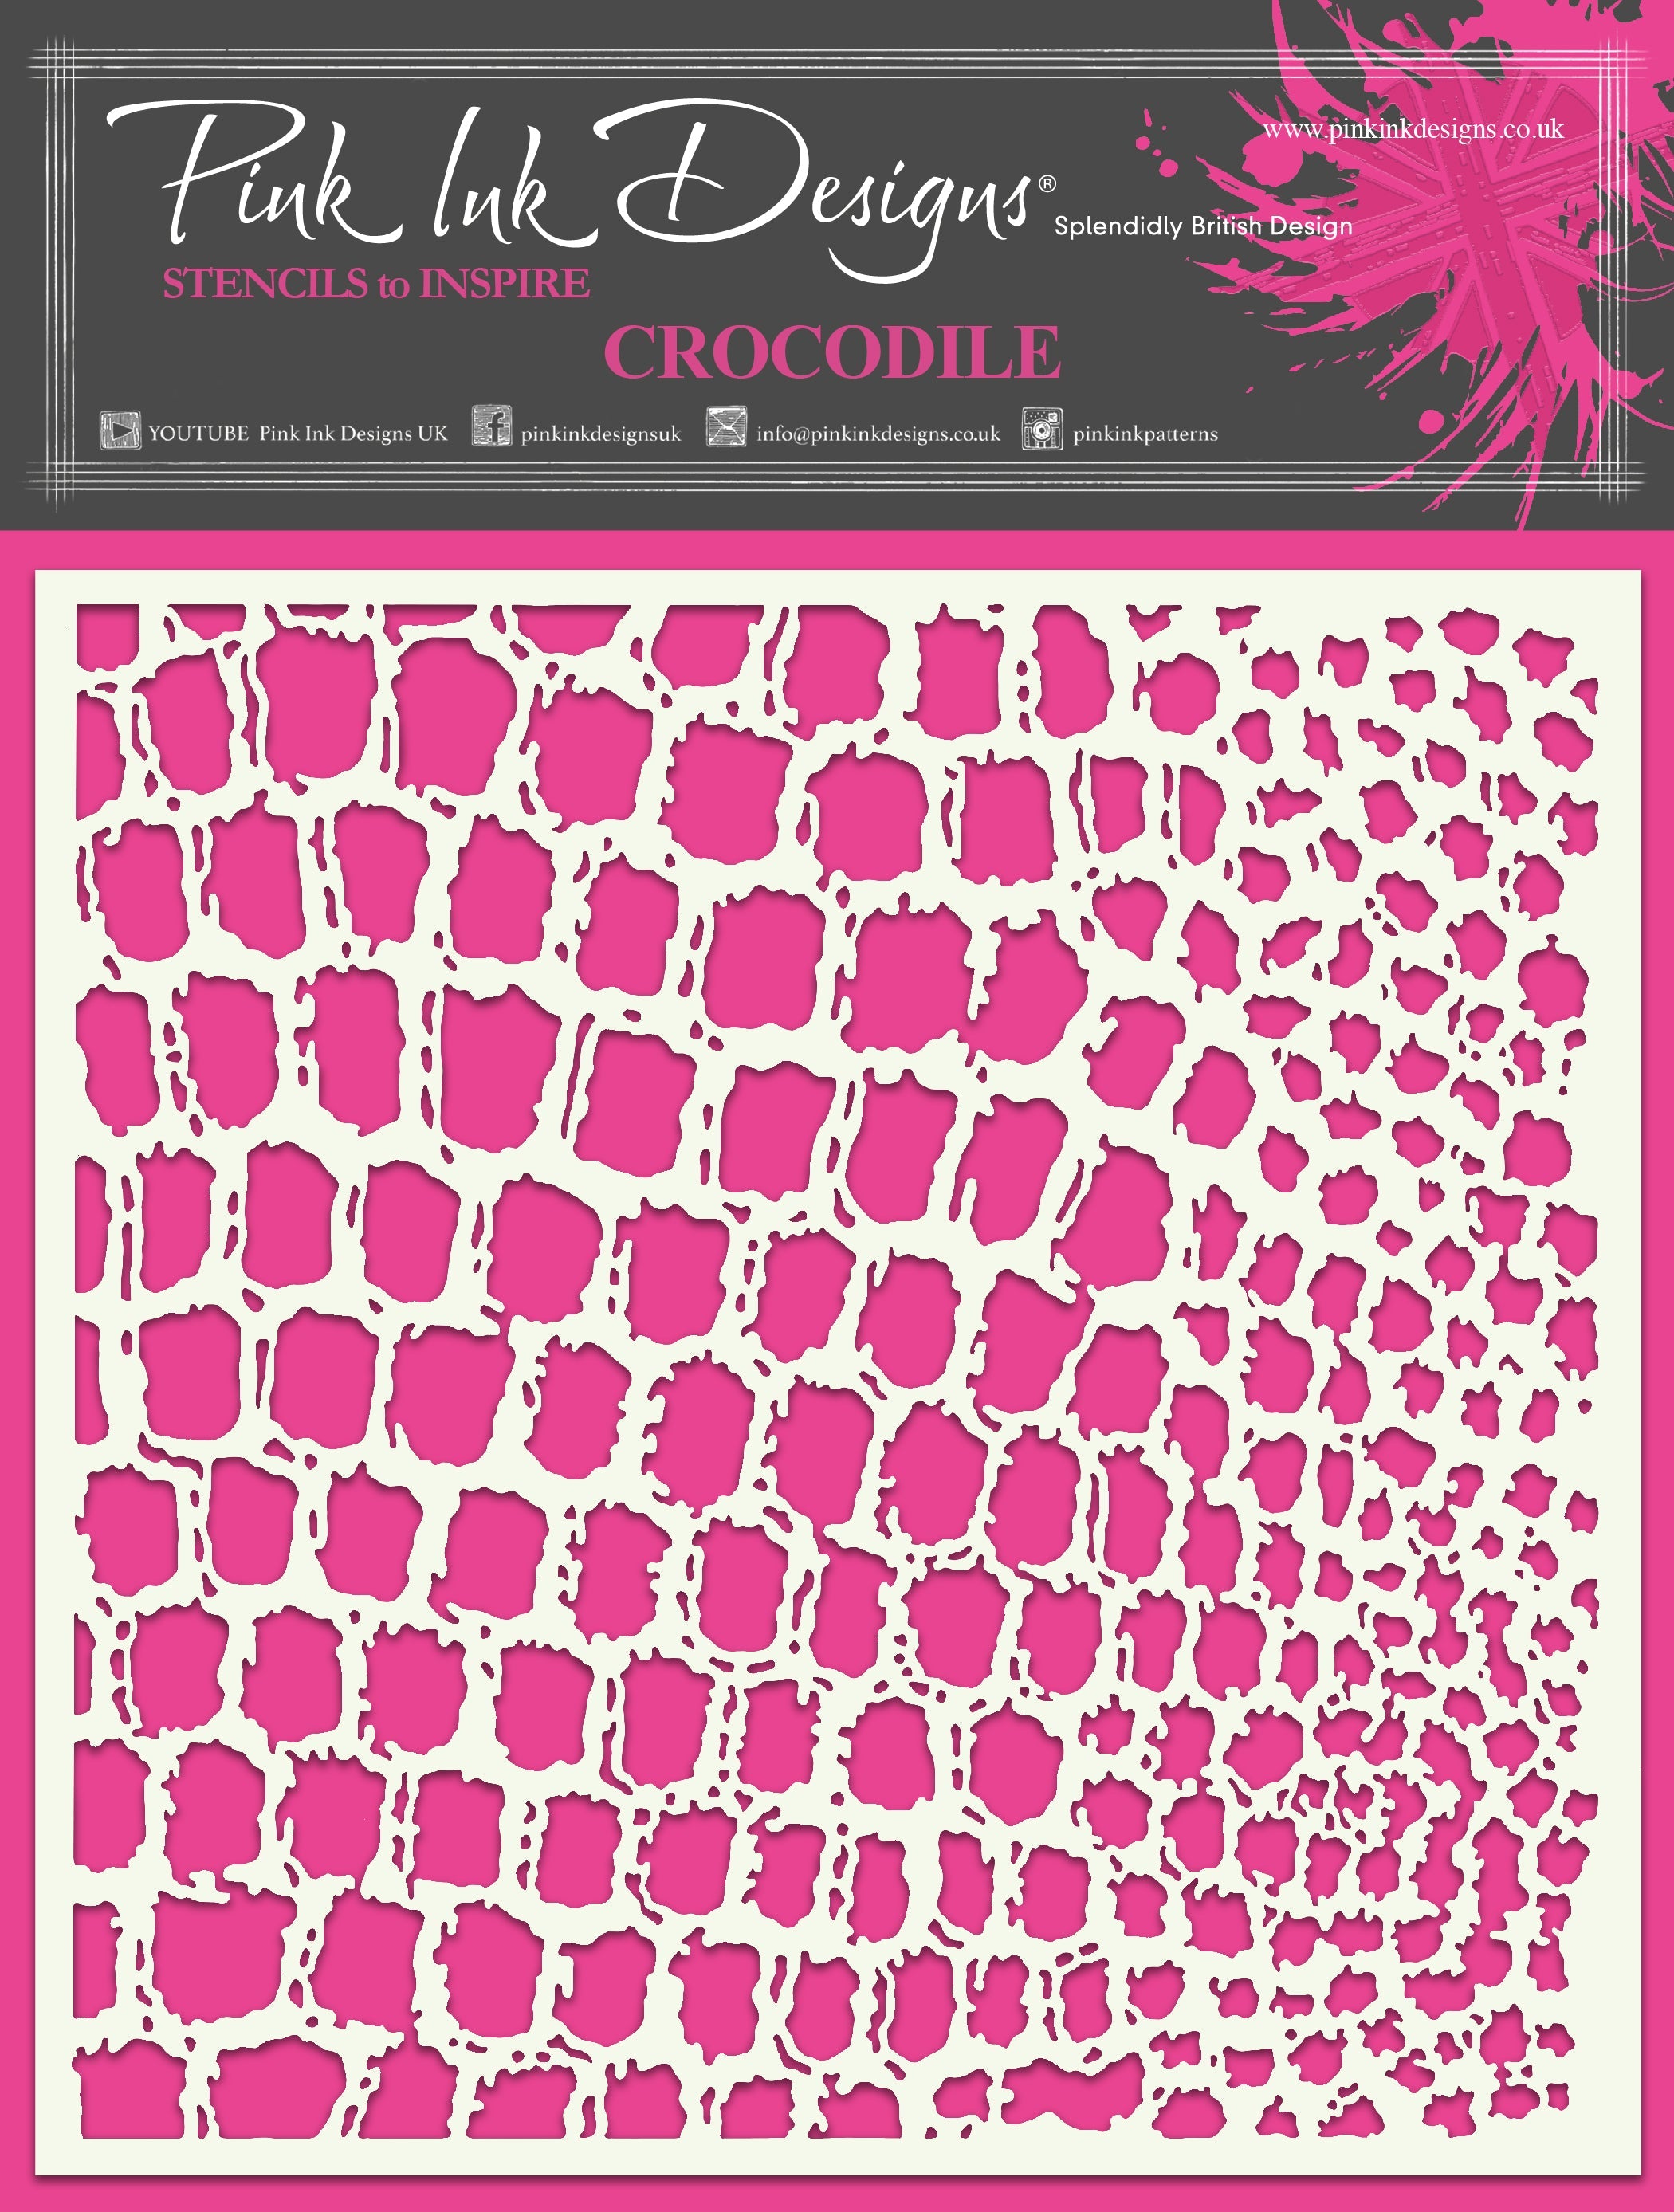 Pink Ink Designs Crocodile 7 in x 7 in Stencil